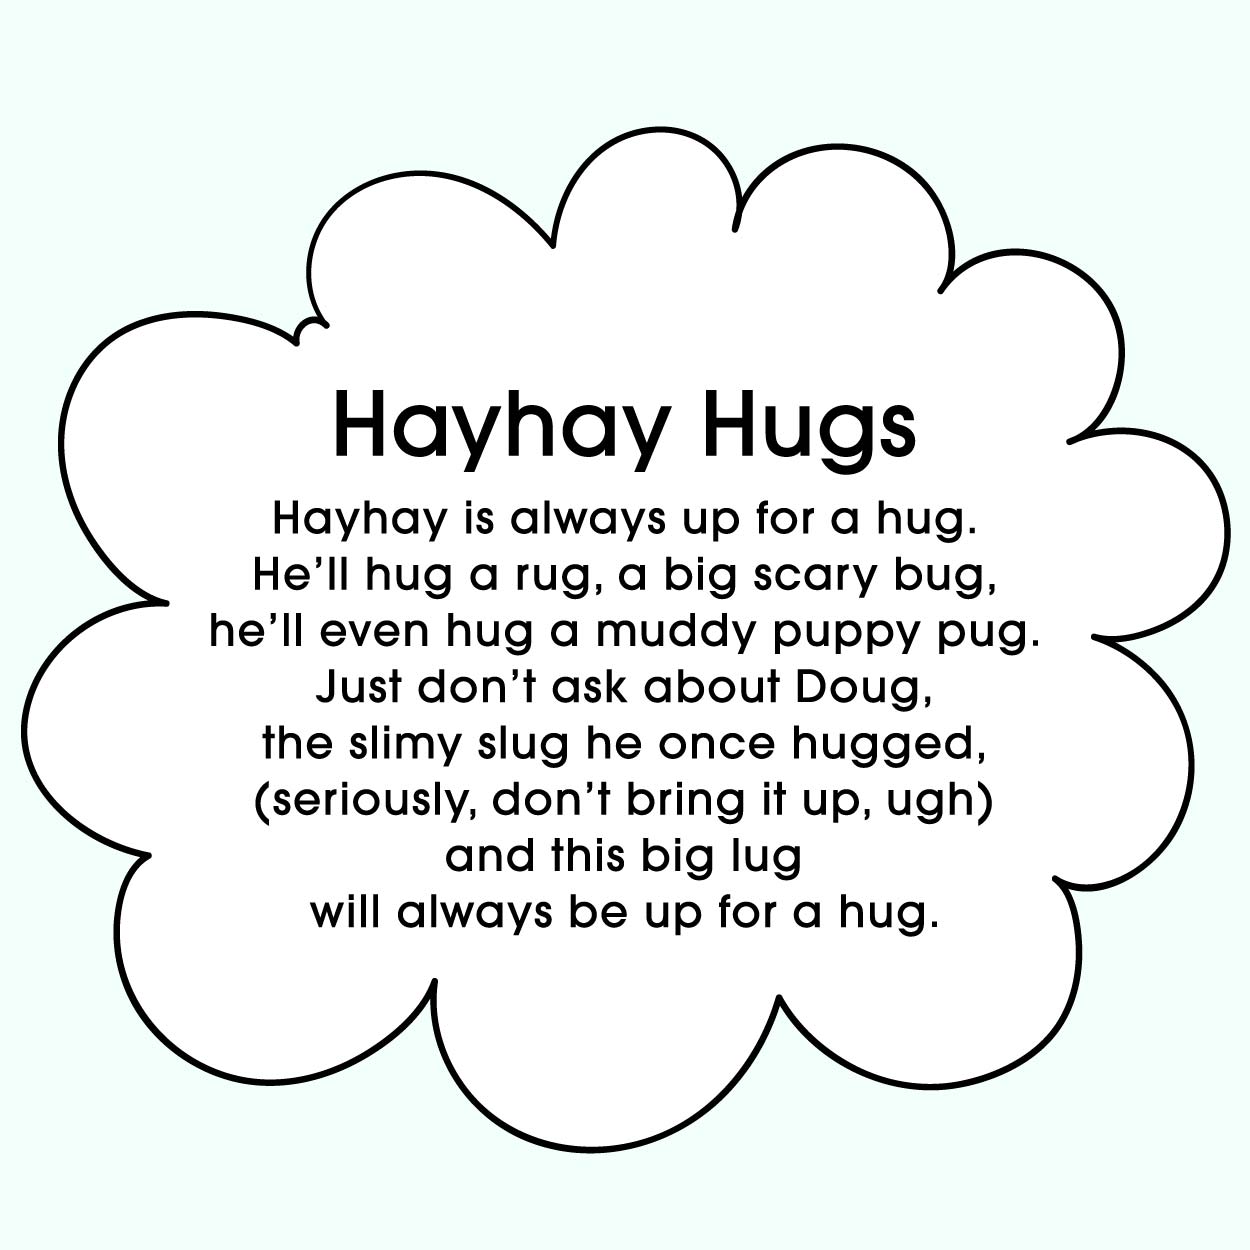 Hayhay Hugs by Monica Escobar Allen | themomemans.com